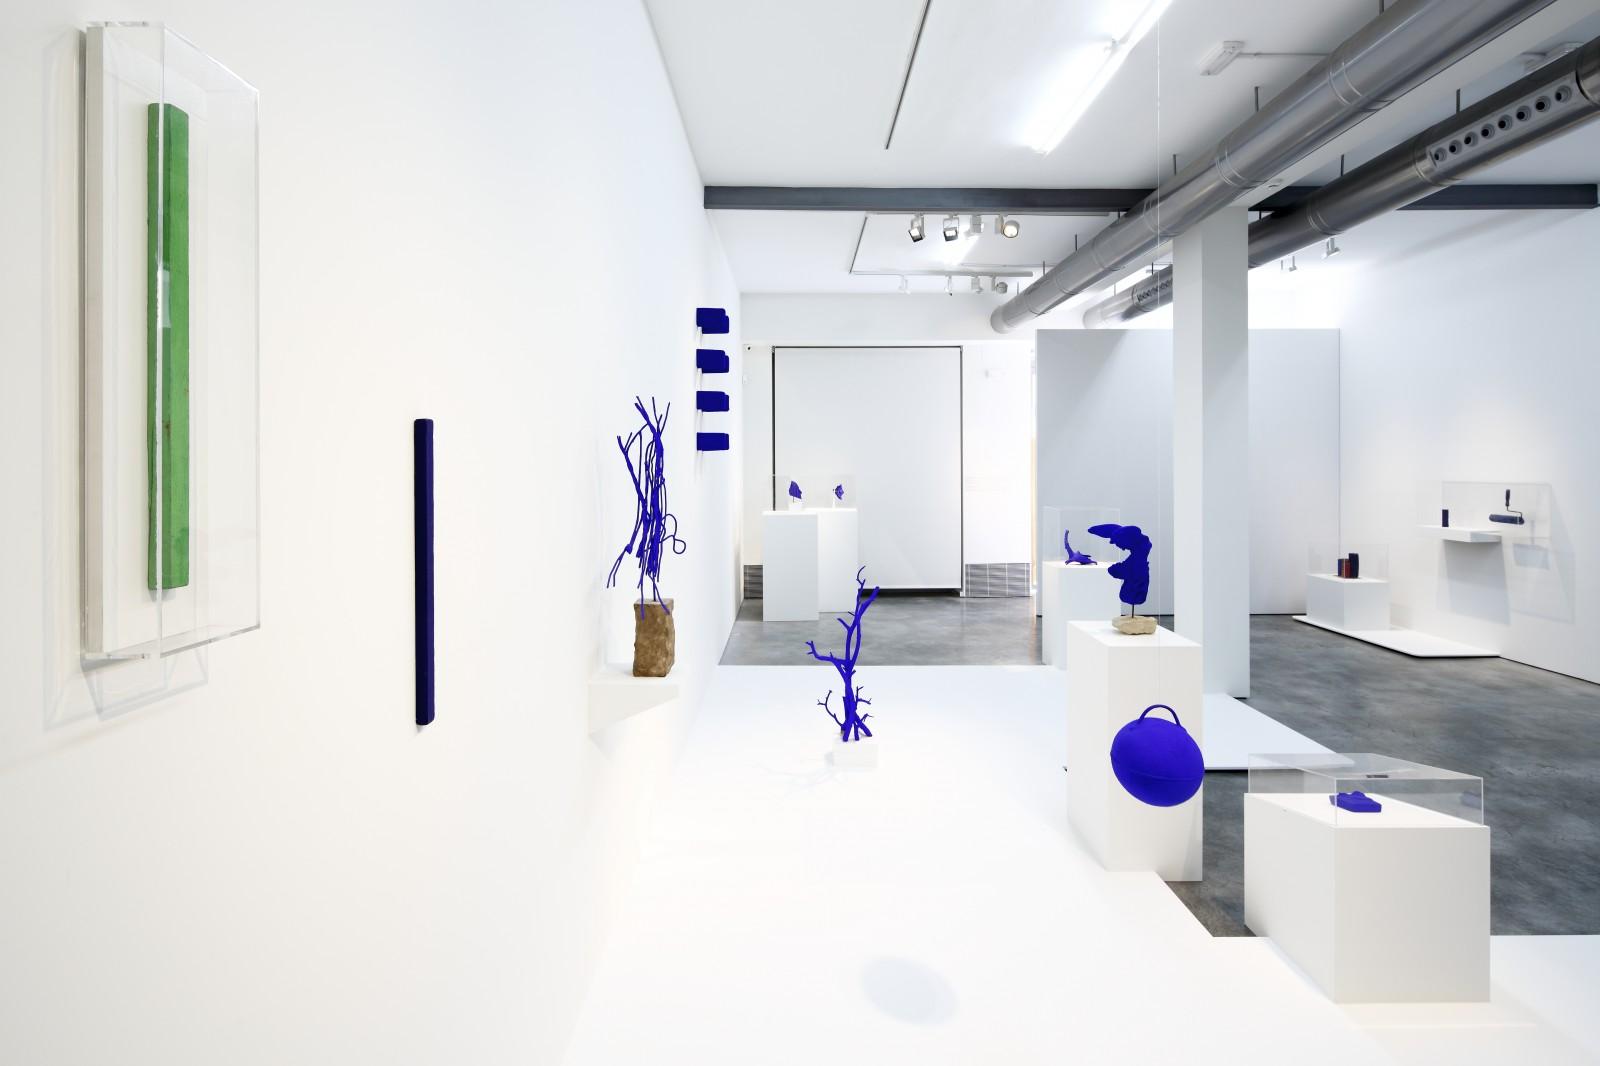 View of the exhibition "Yves Klein - Intimo", Galería Cayón, 2015